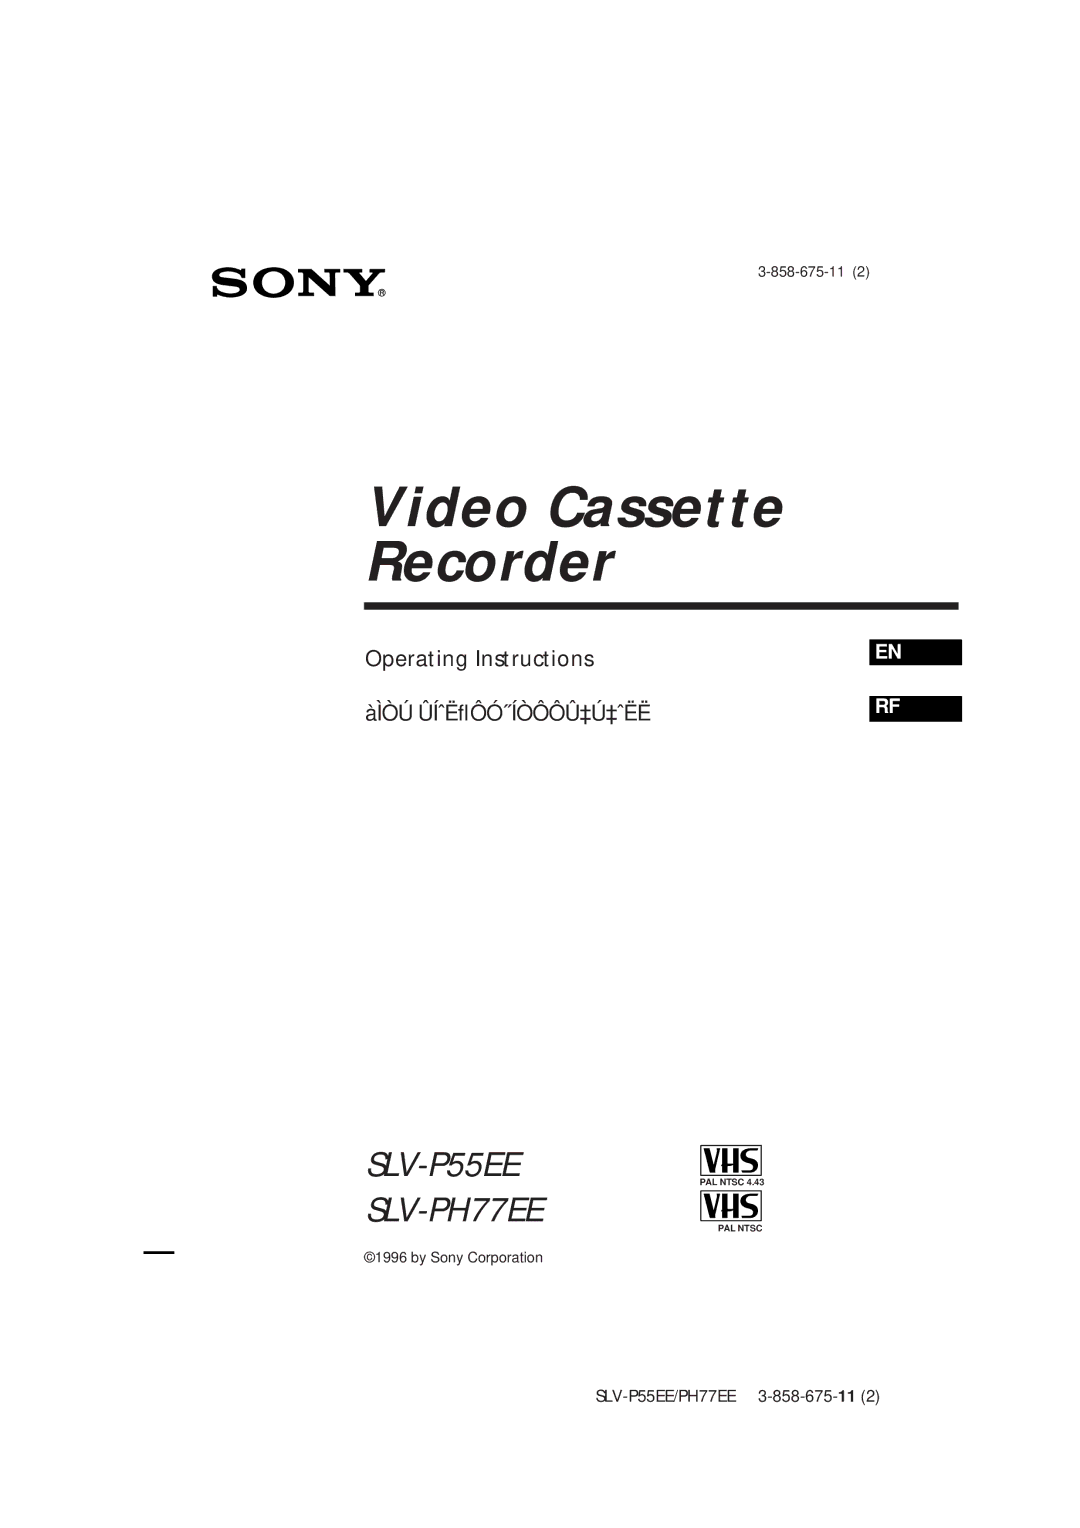 Sony SLV-PH77EE, SLV-P55EE operating instructions Video Cassette Recorder 